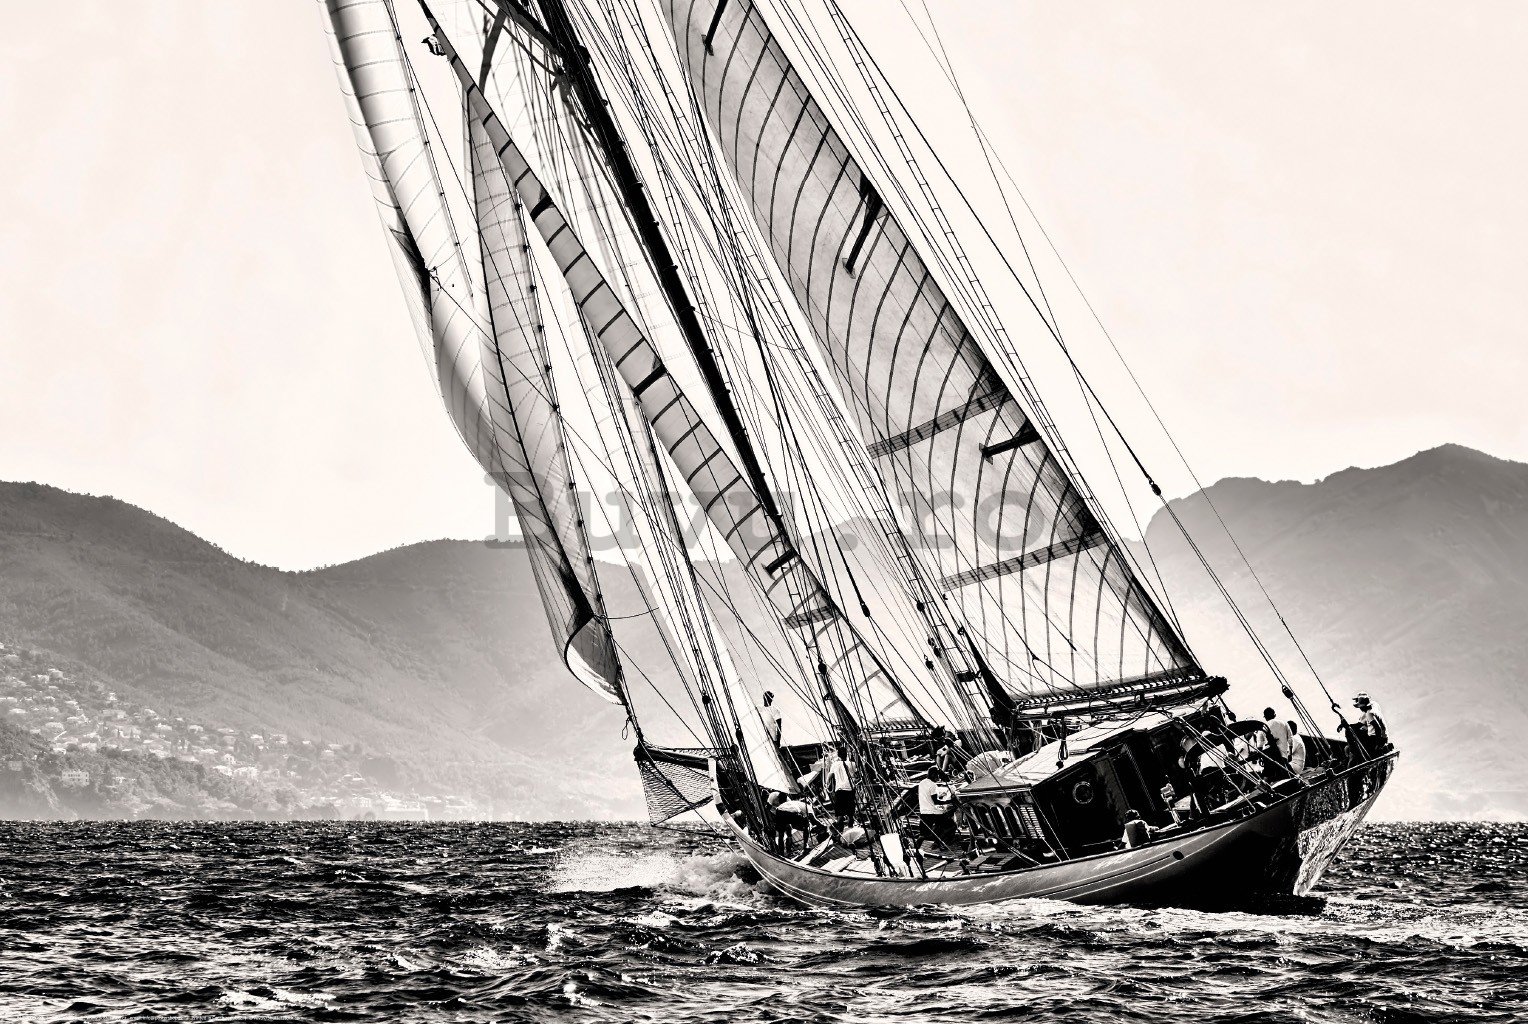 Poster: Yachting (barca cu pânze alb-negru)